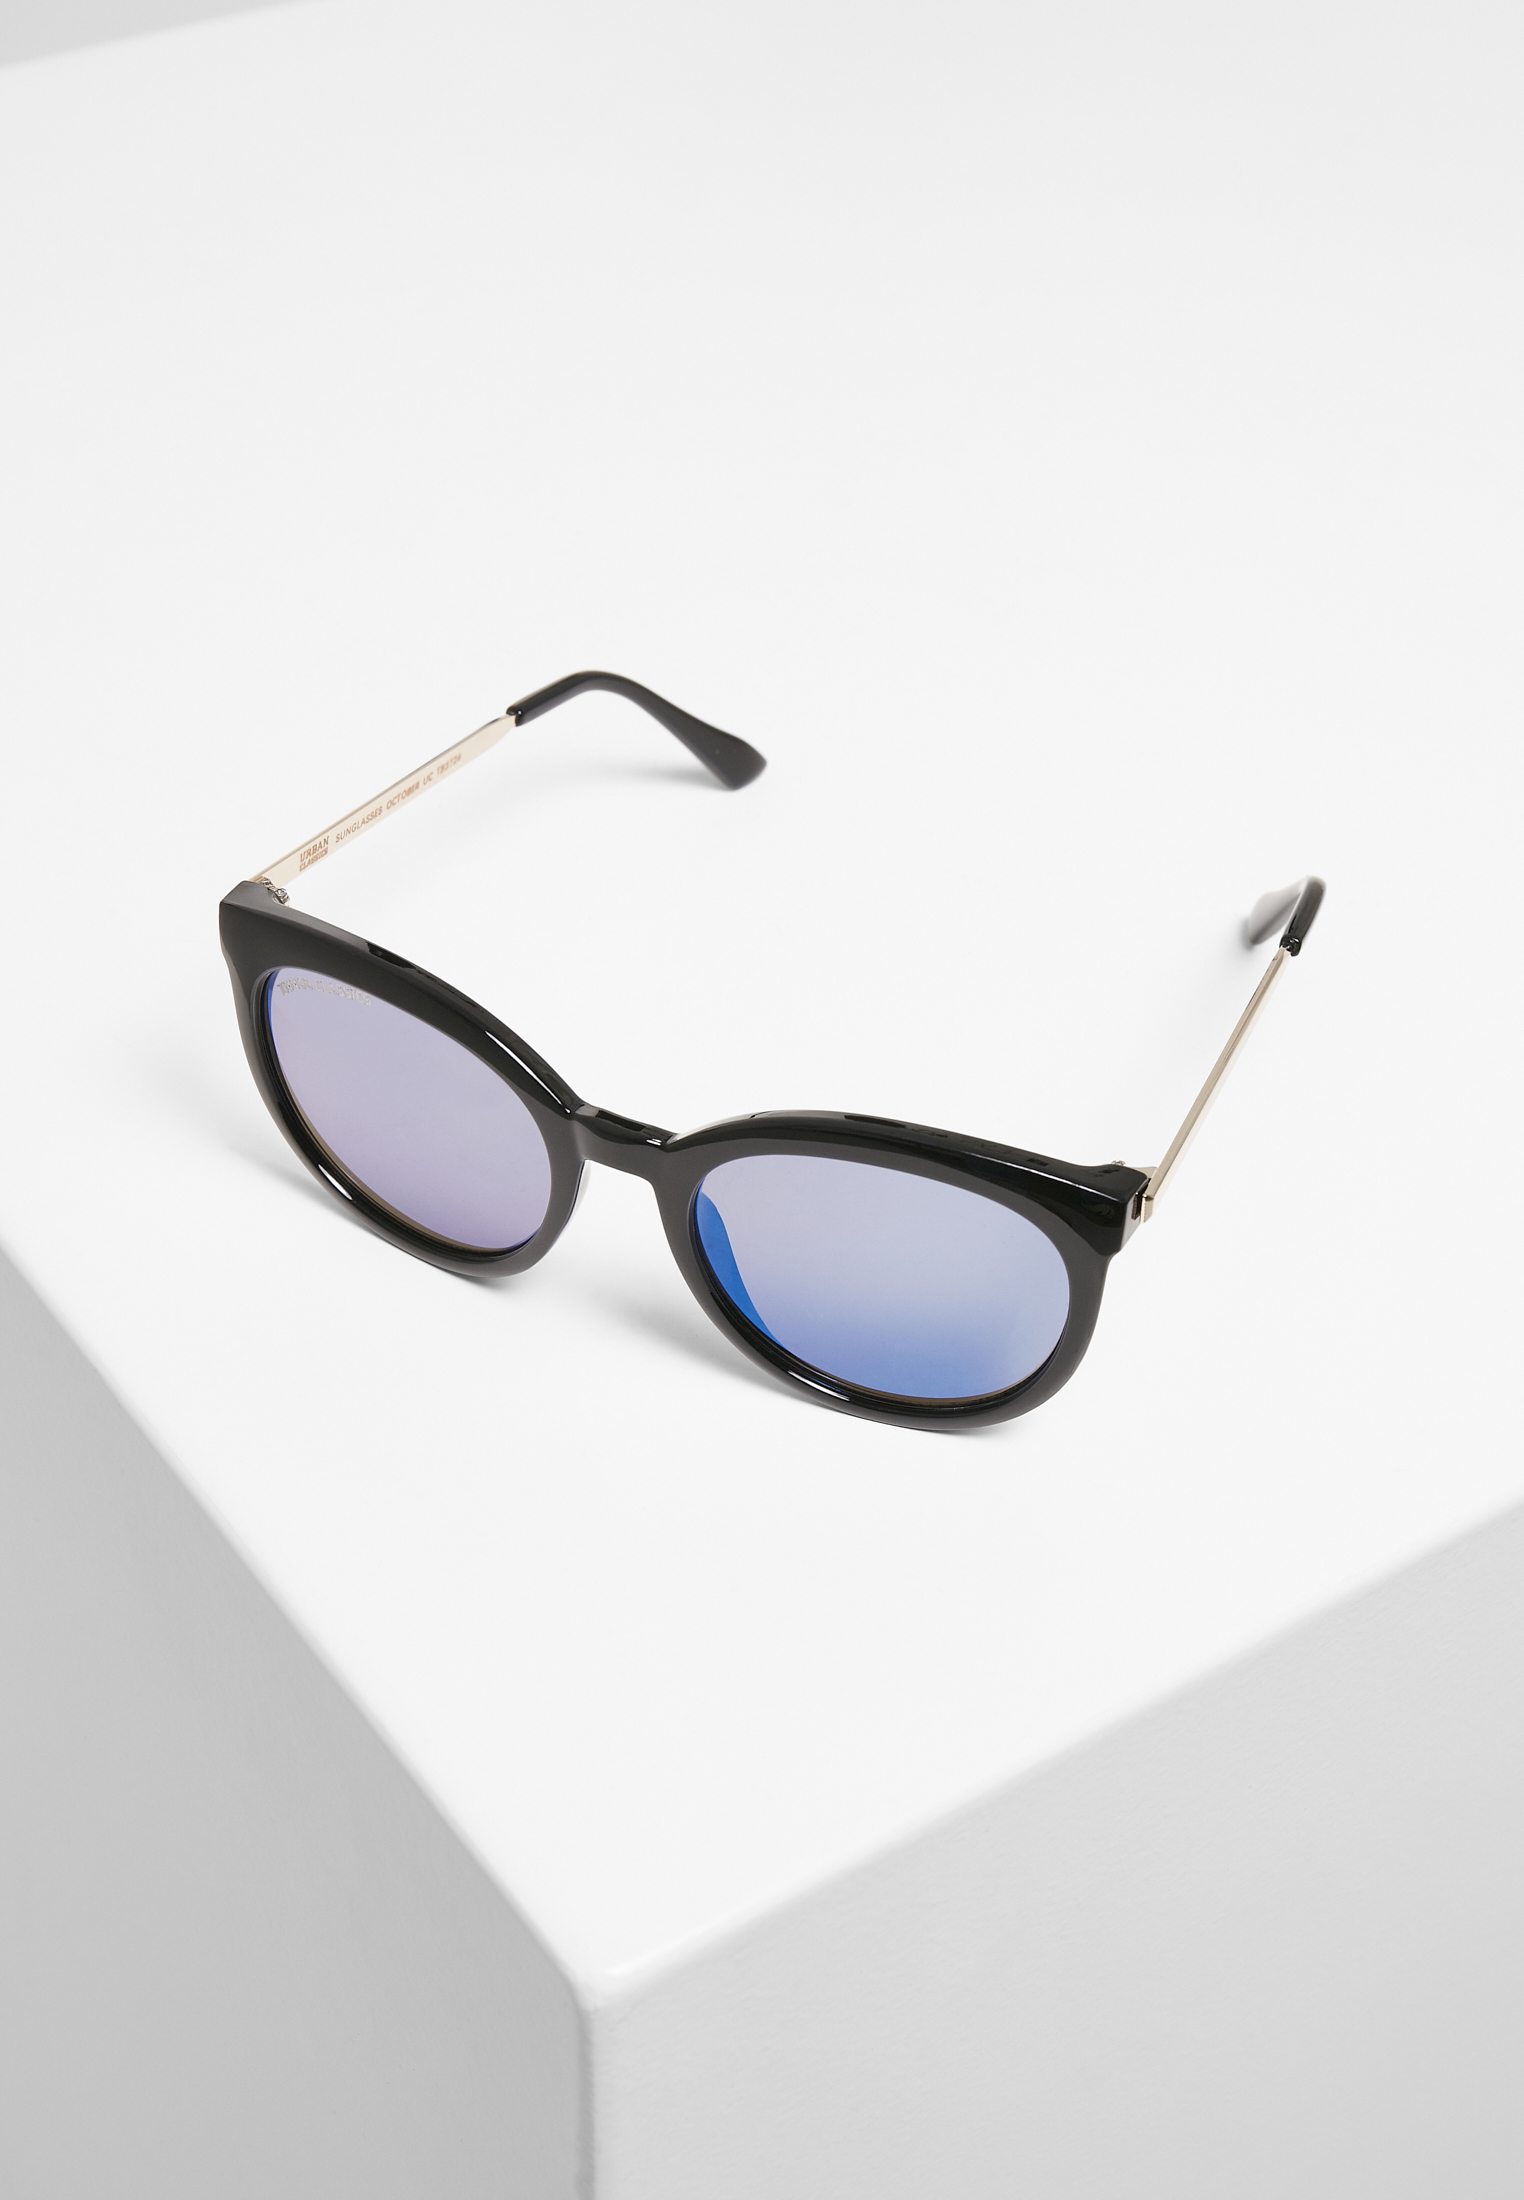 Sonnenbrillen Sunglasses October UC in Farbe black/blue